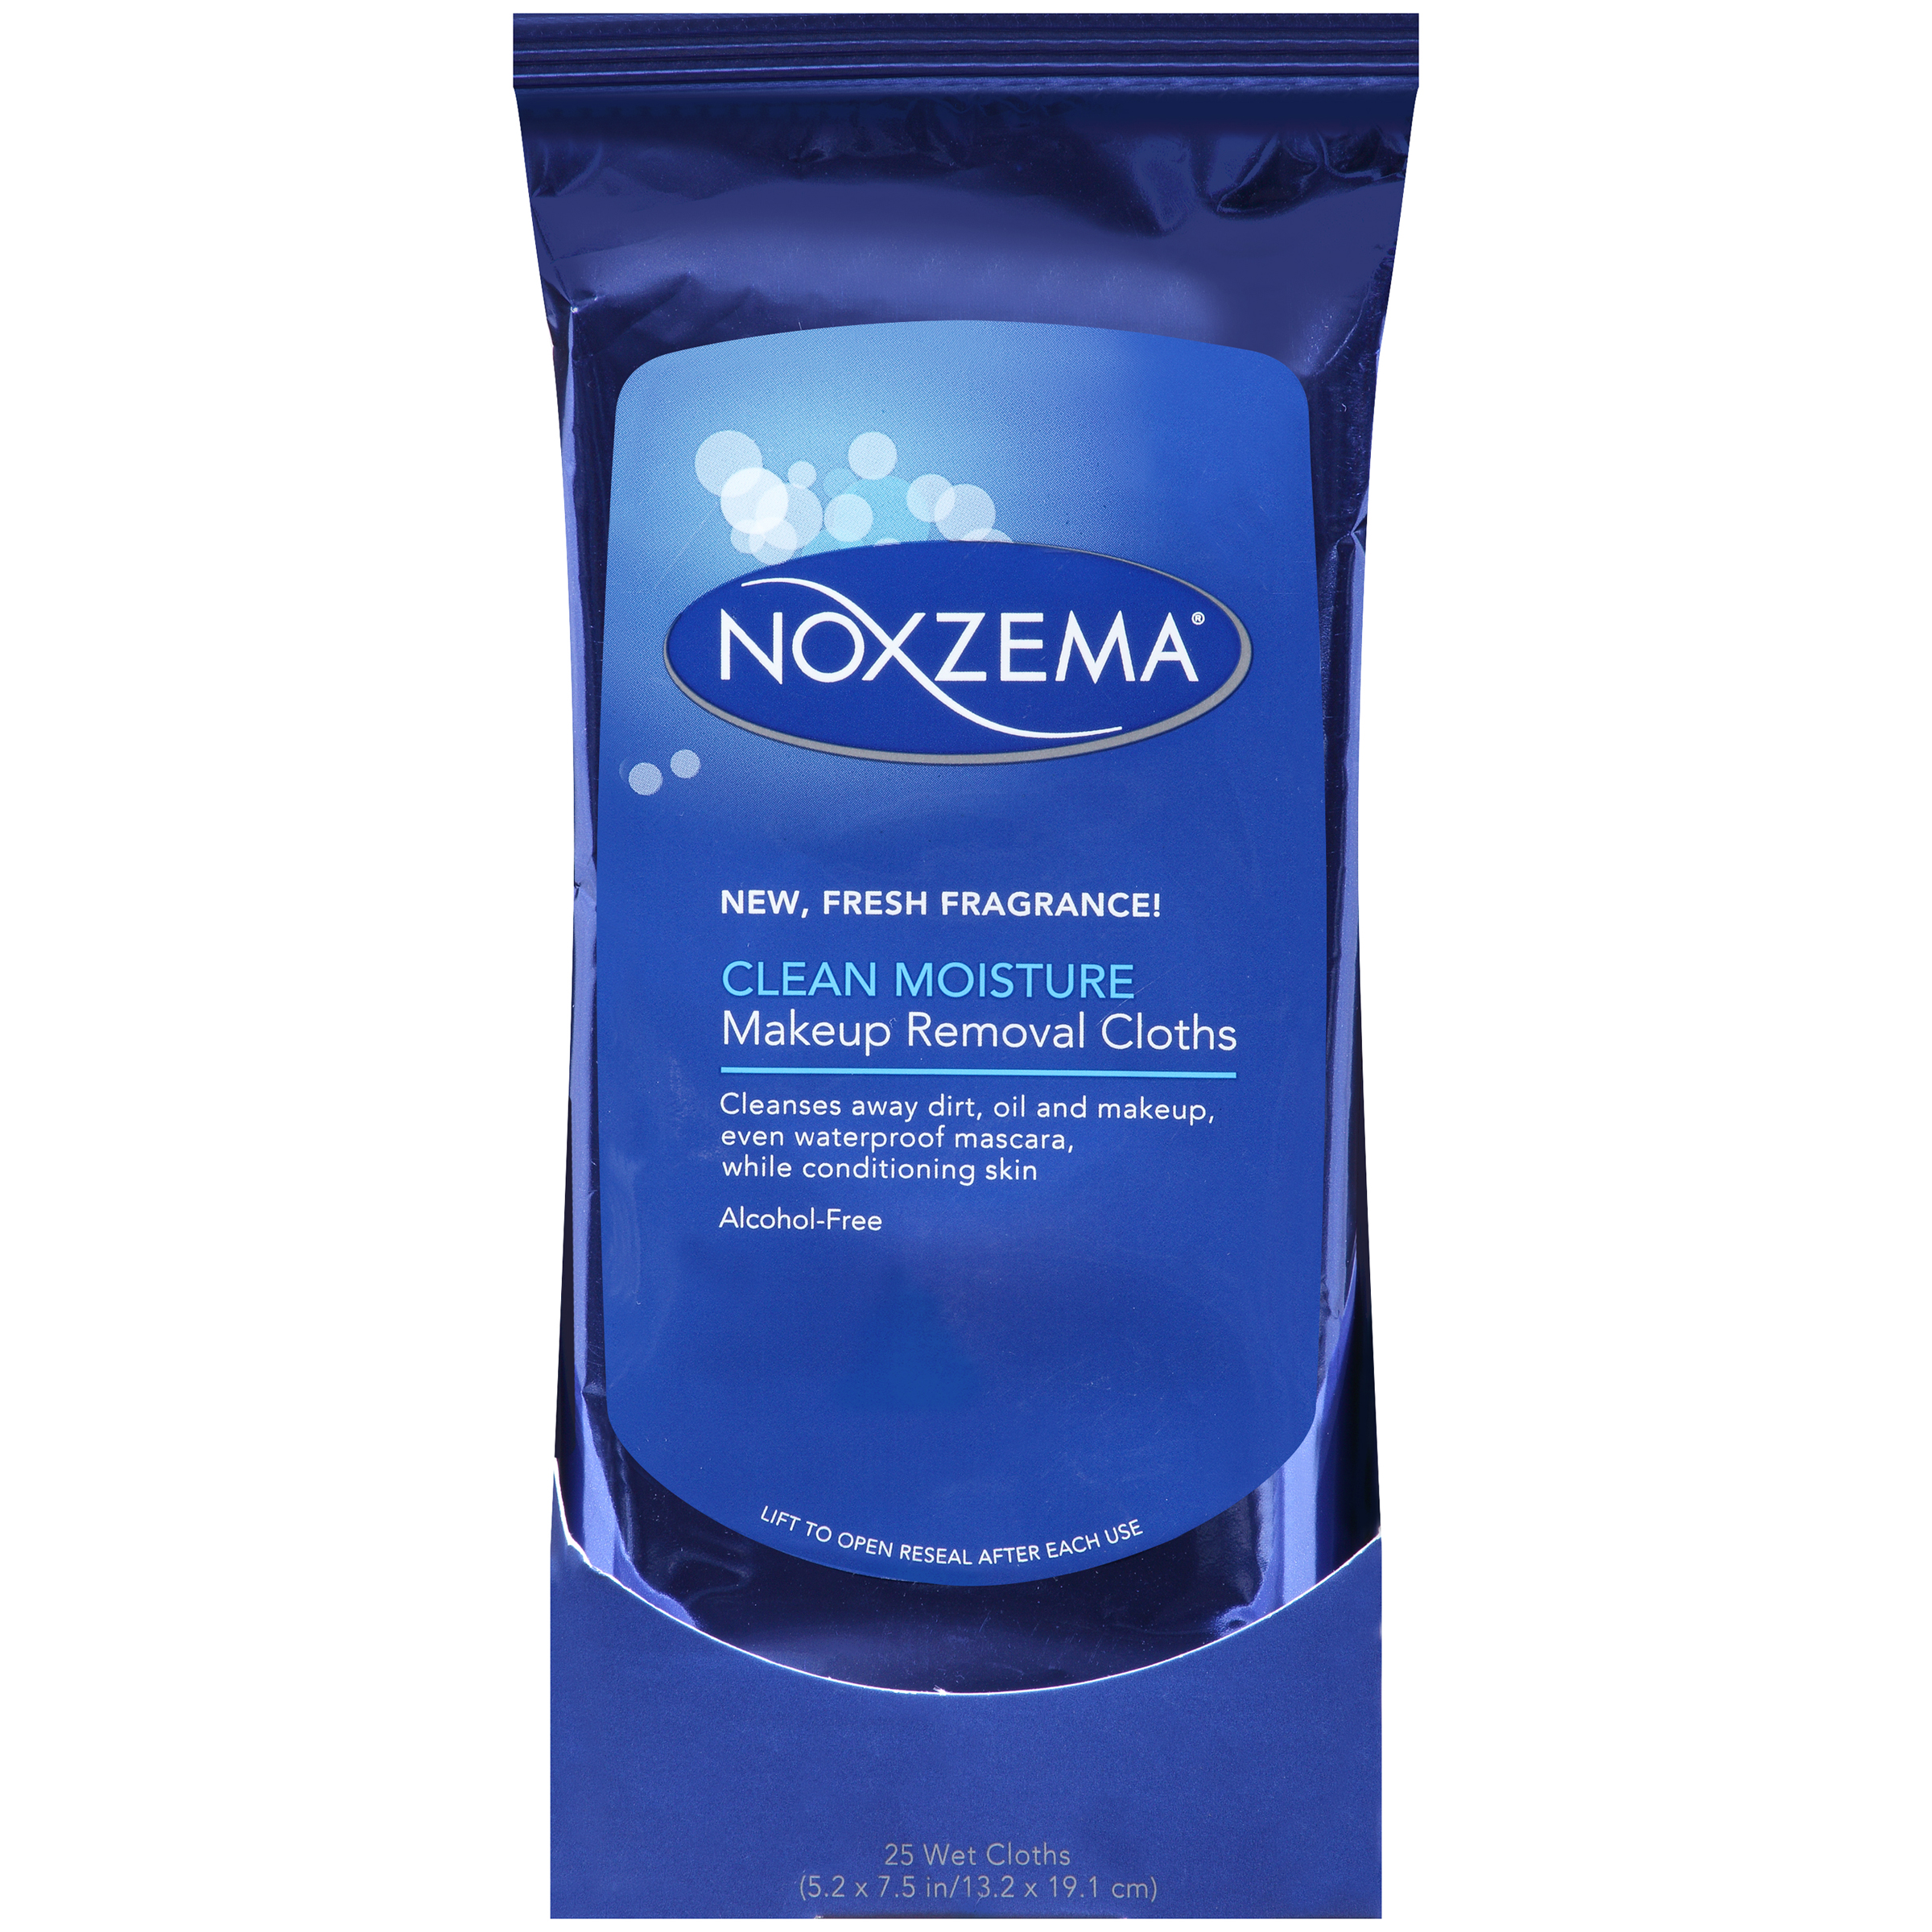 Noxzema Makeup Removal Cloths, Clean Moisture, 25 cloths